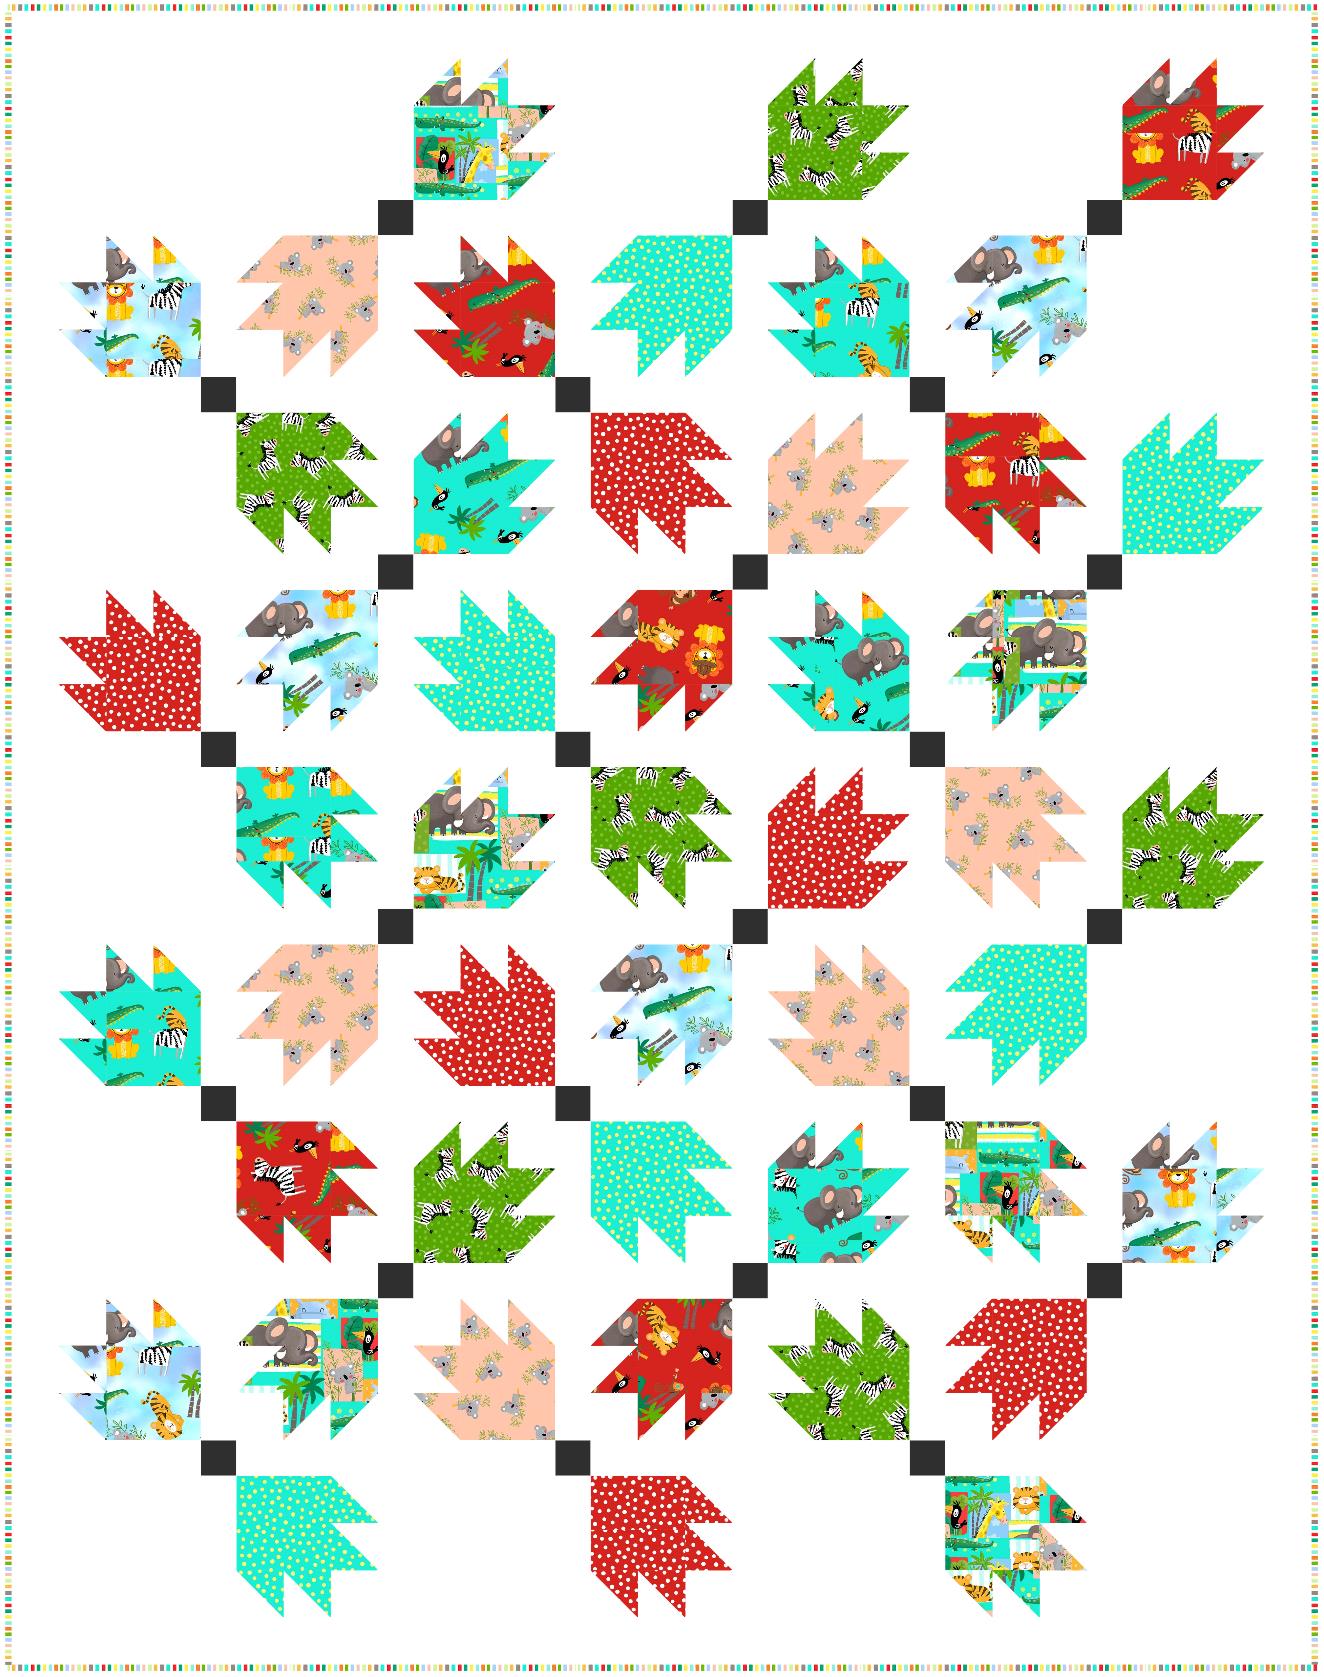 Tea Leaves - Digital Pattern